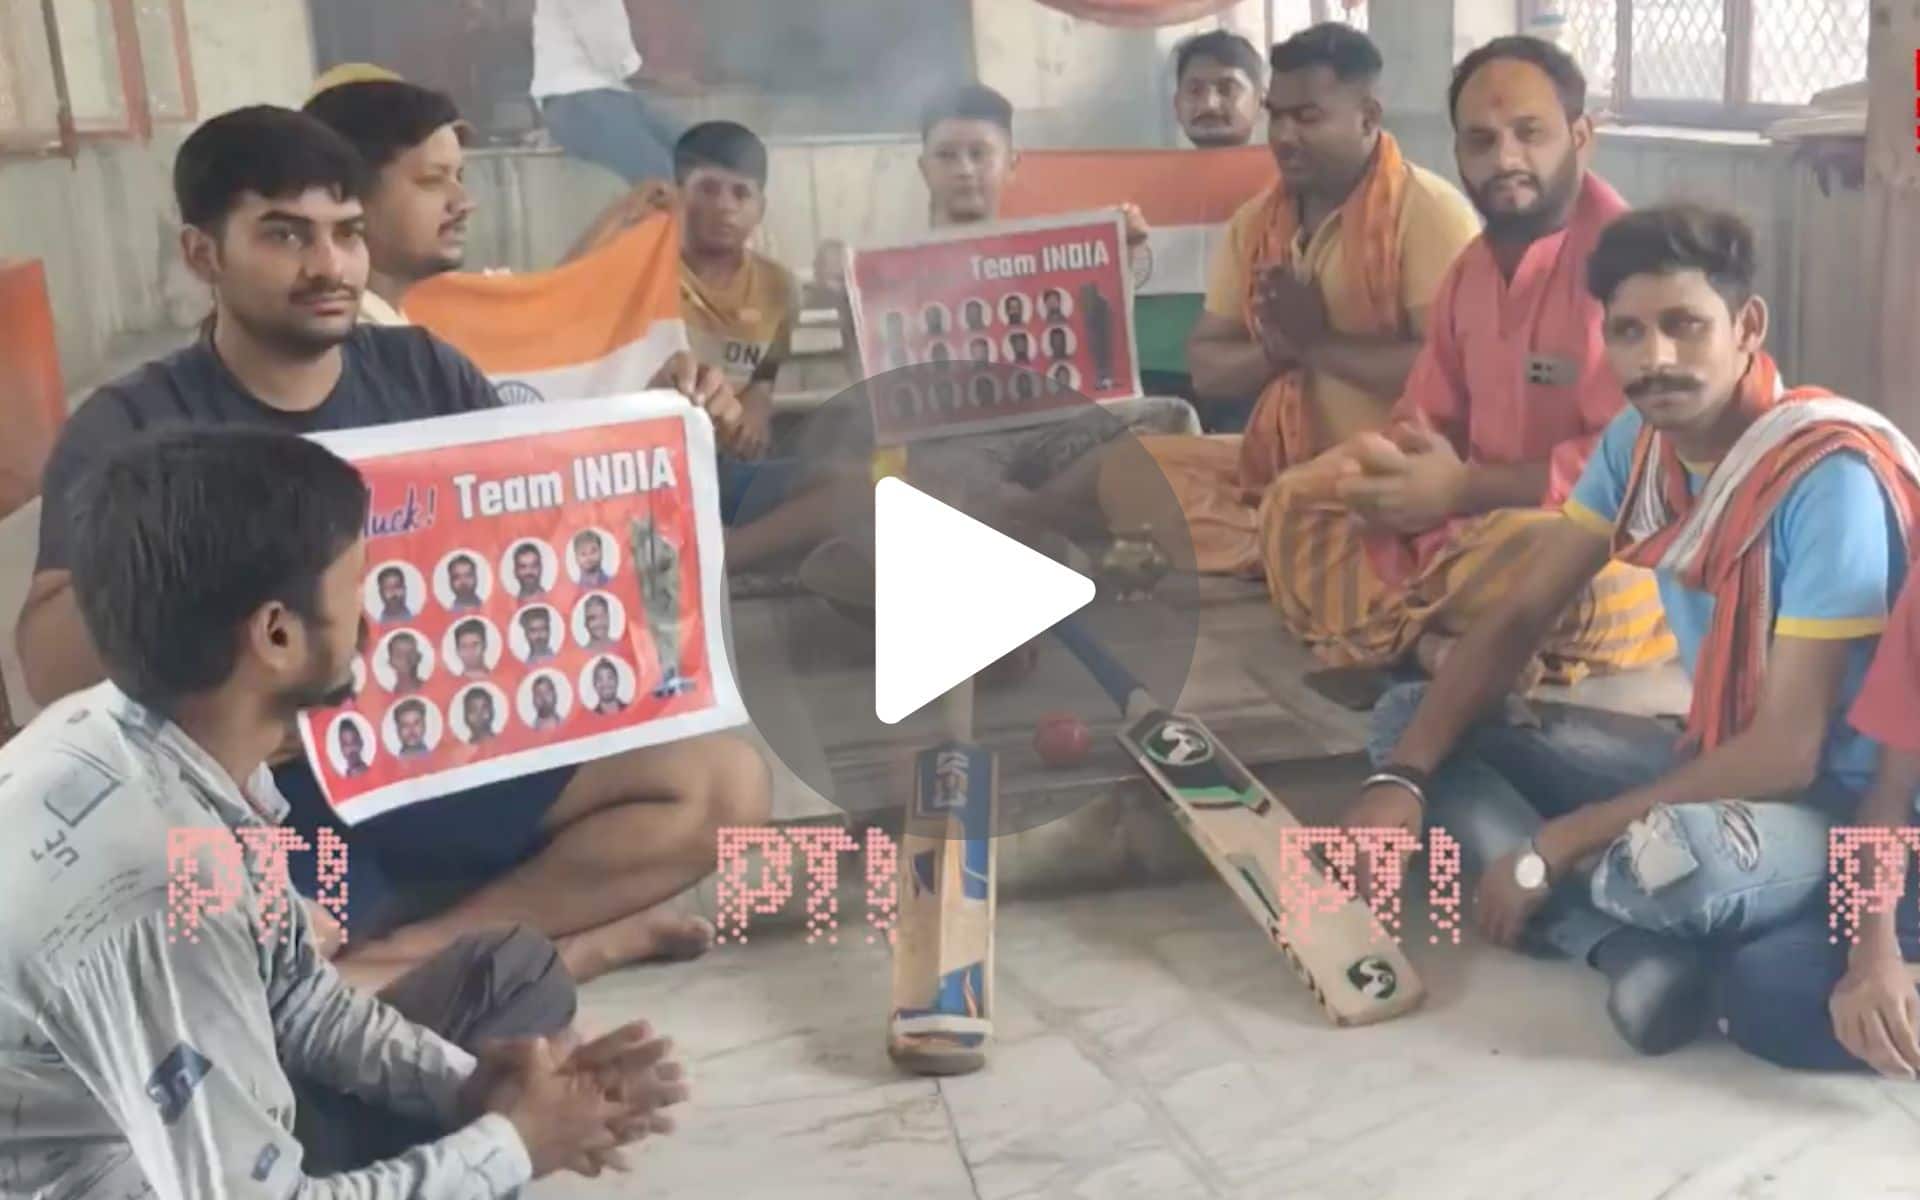 [Watch] Indian Fans Perform 'Havan' In Prayagraj Ahead Of IND-ENG Semi-finals